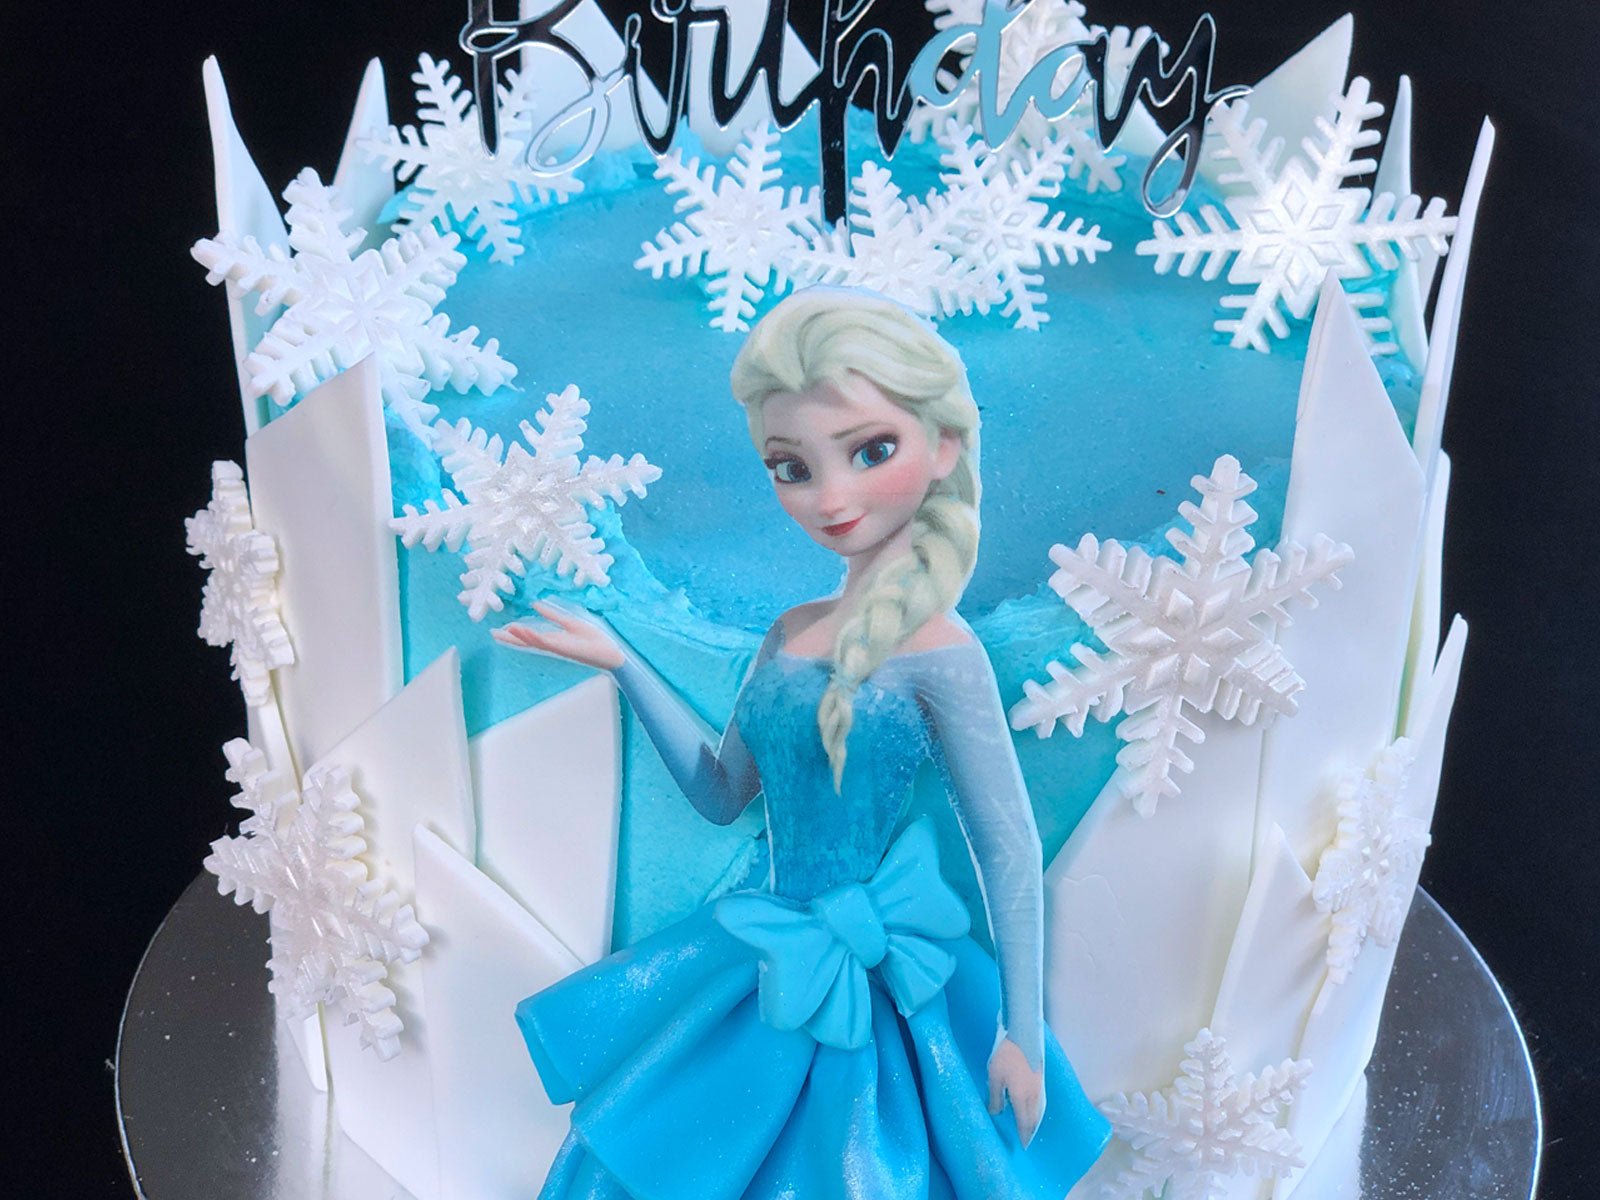 Foret Blanc | Artisan Cakes | French Cakes & Pastry | Designer Cakes |  Chocolate Pinata | Macaron | Flowers & Balloon | Gifts | Designer Cakes Elsa  in Winter Wonderland Cake